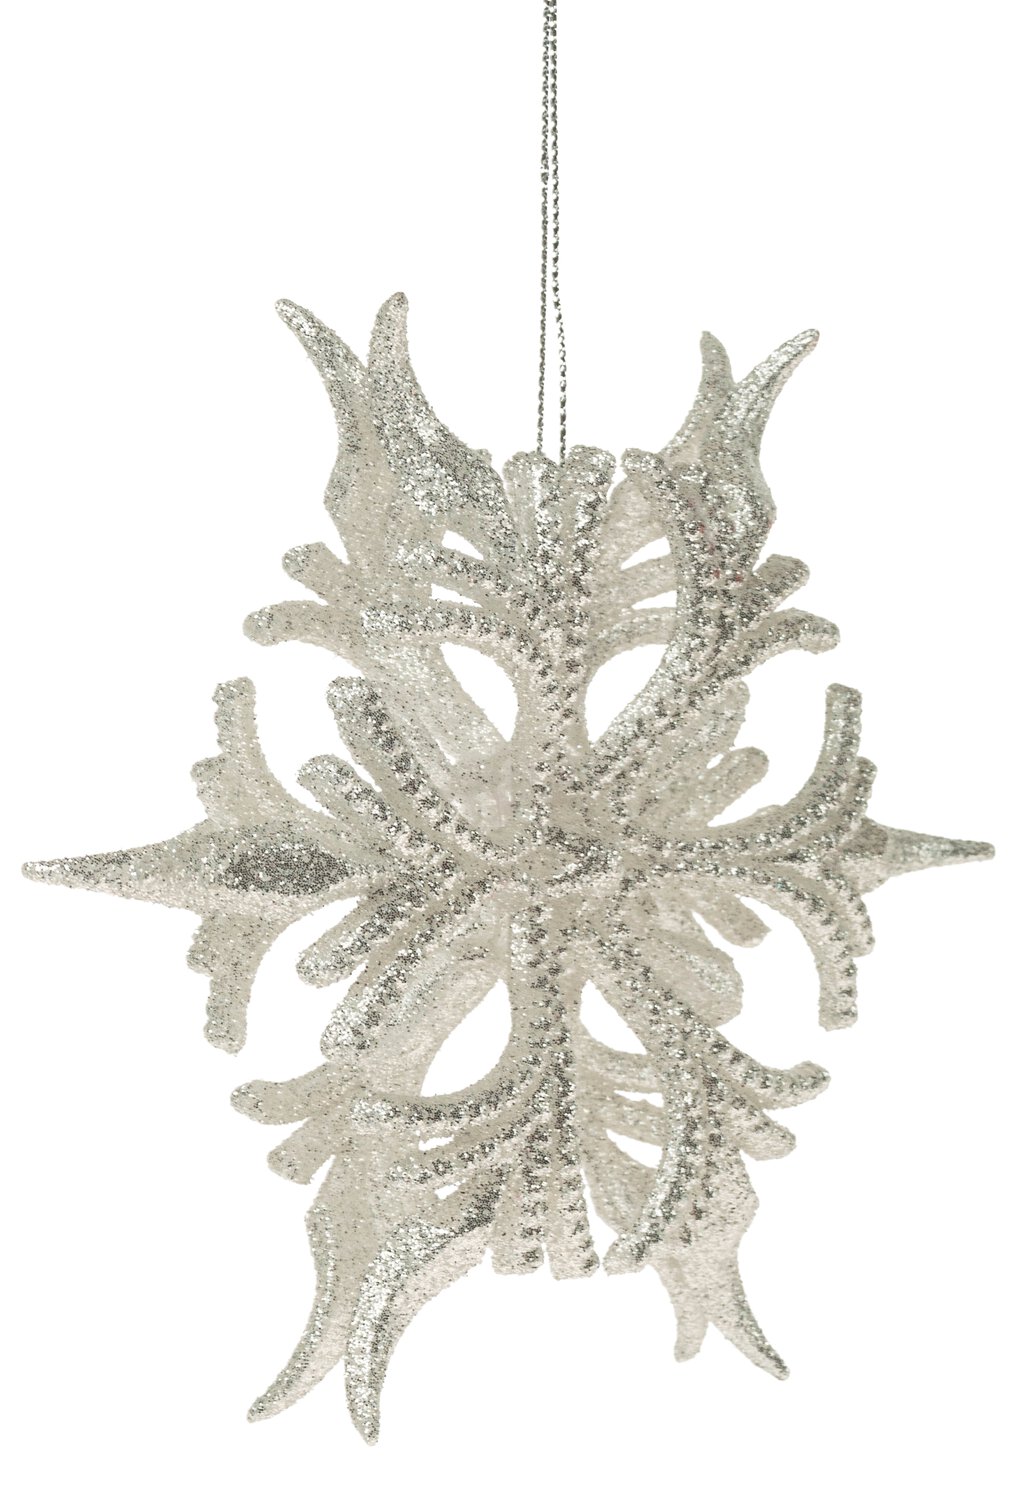 Deco snow crystal made of acrylic, 2 pieces, Ø 13 cm, silver